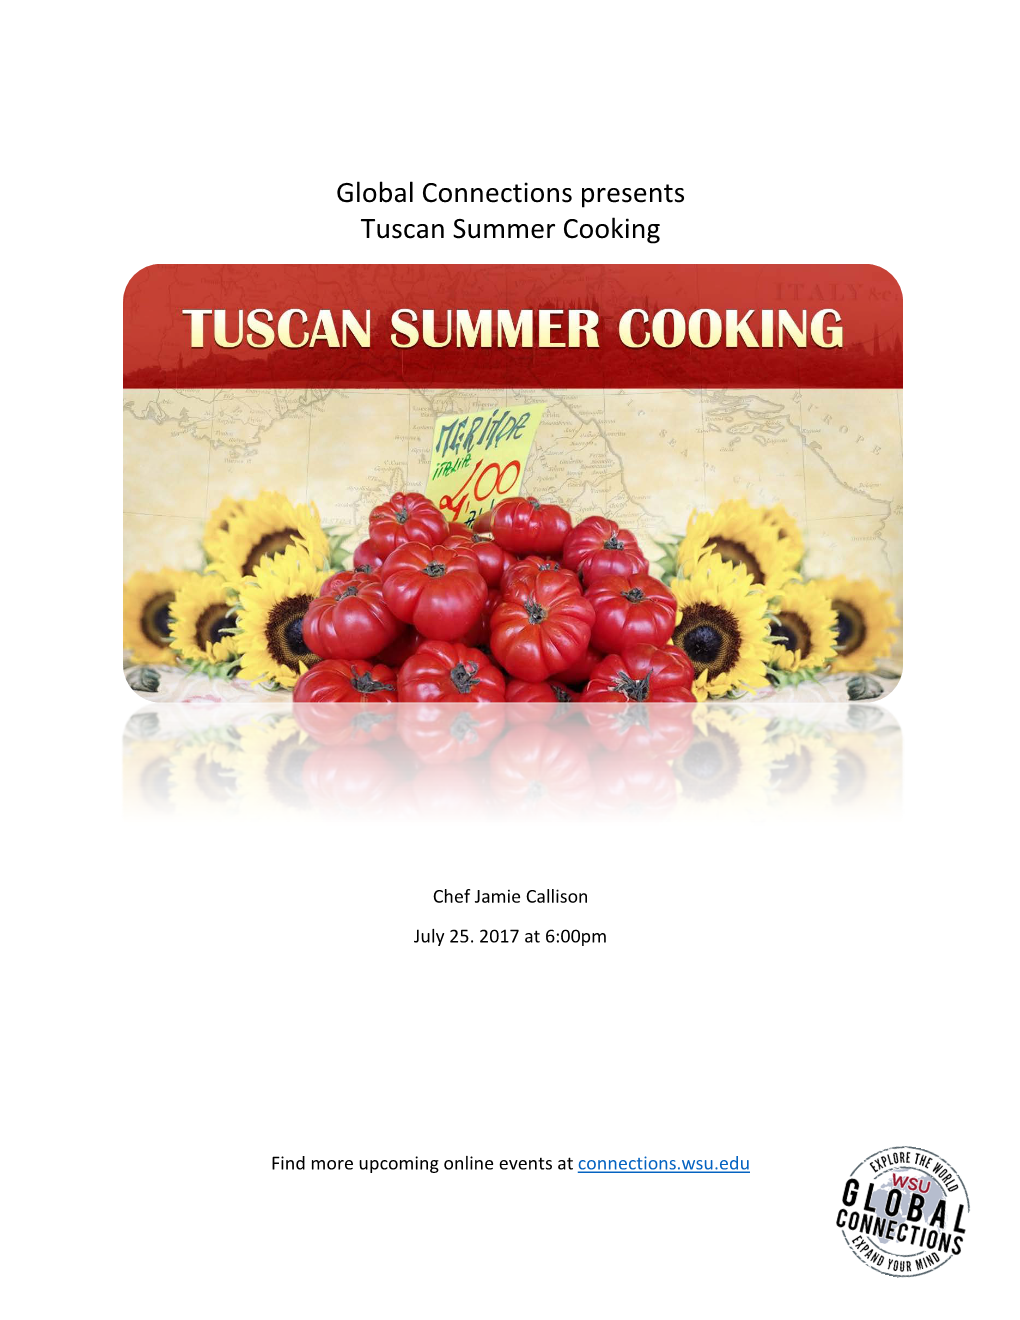 Tuscan Summer Cooking